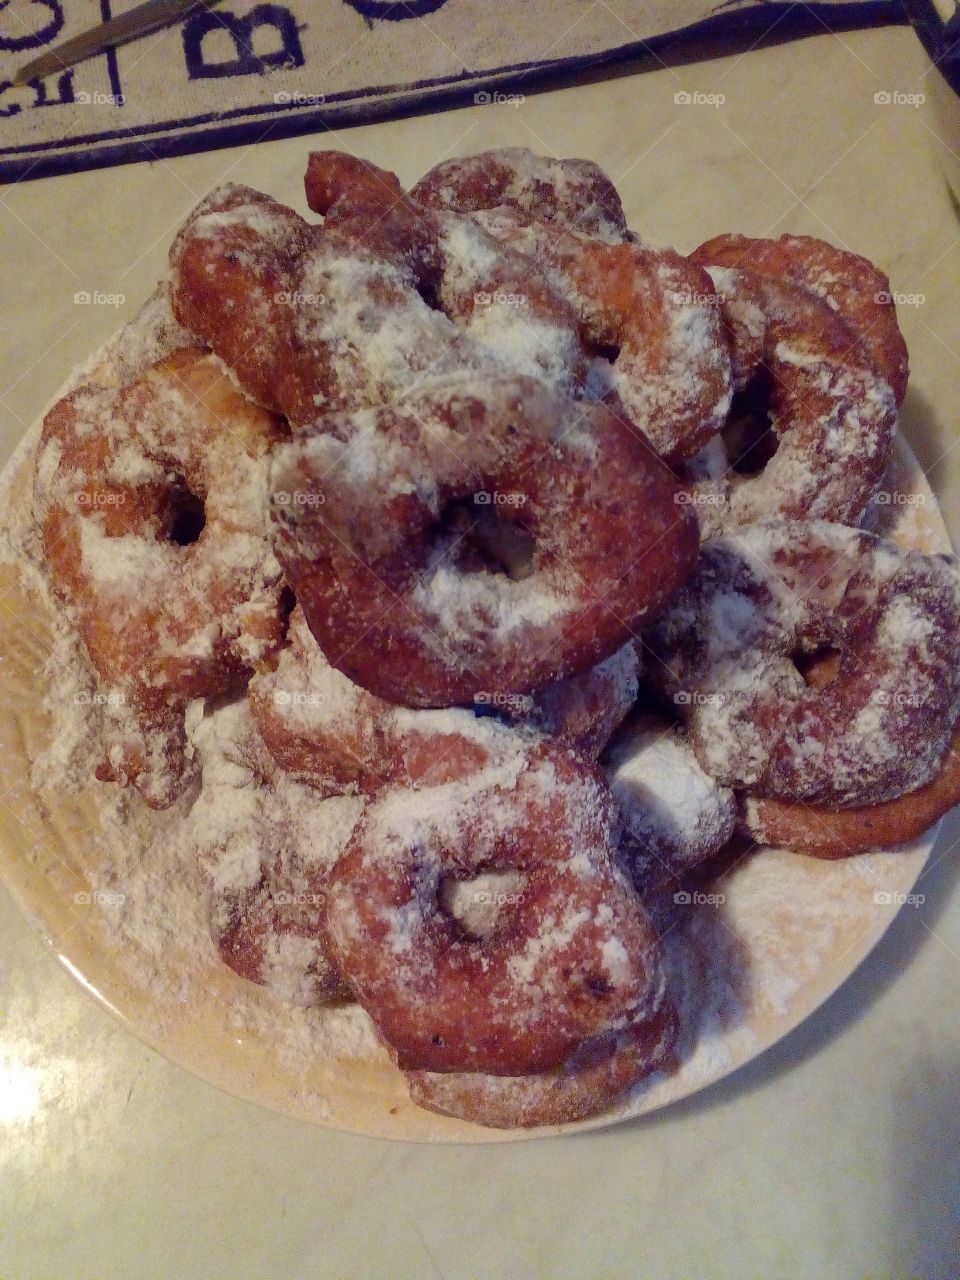 donuts in powdered sugar